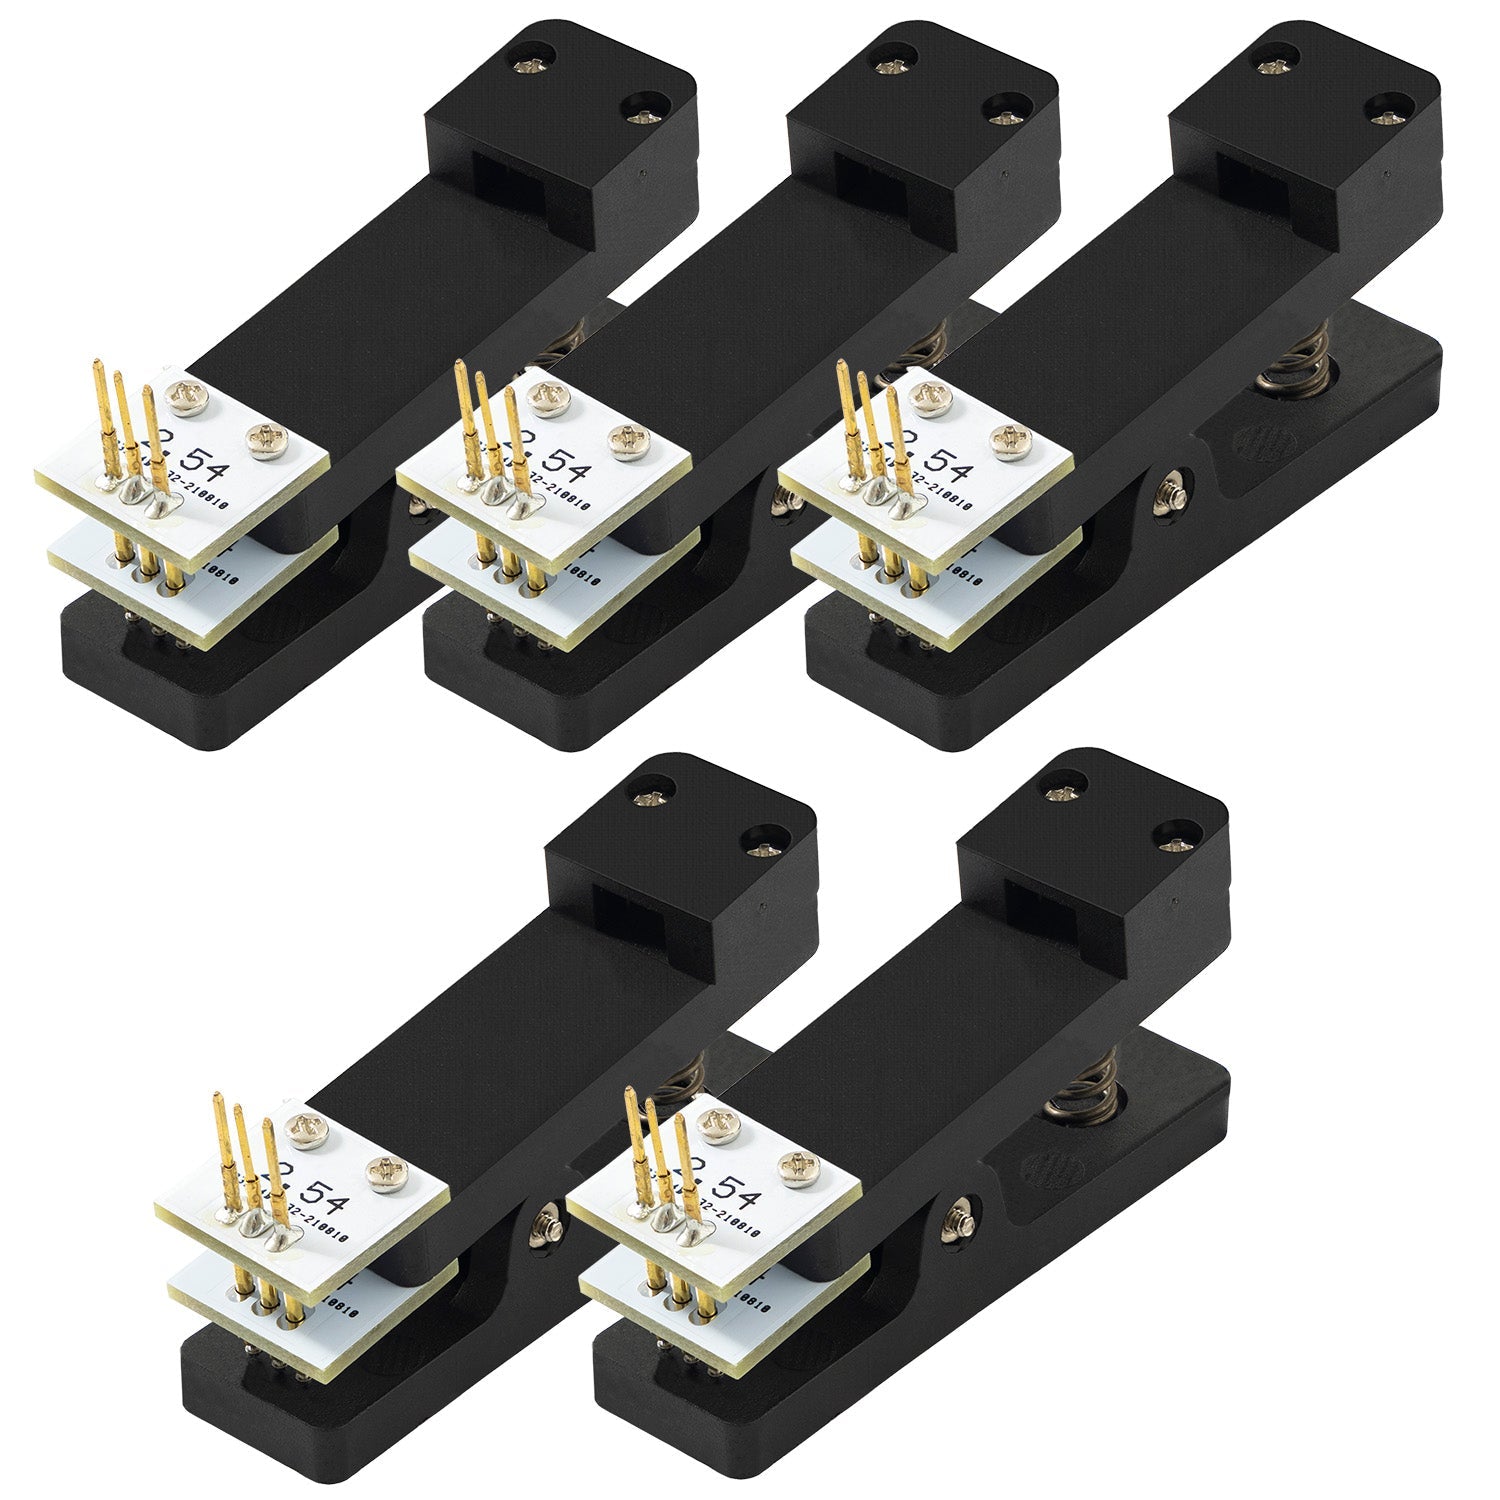 3 Pin Module Testhulpmiddel Prototyping Klemmen 1x3 P 2.54MM Pitch Tester Module